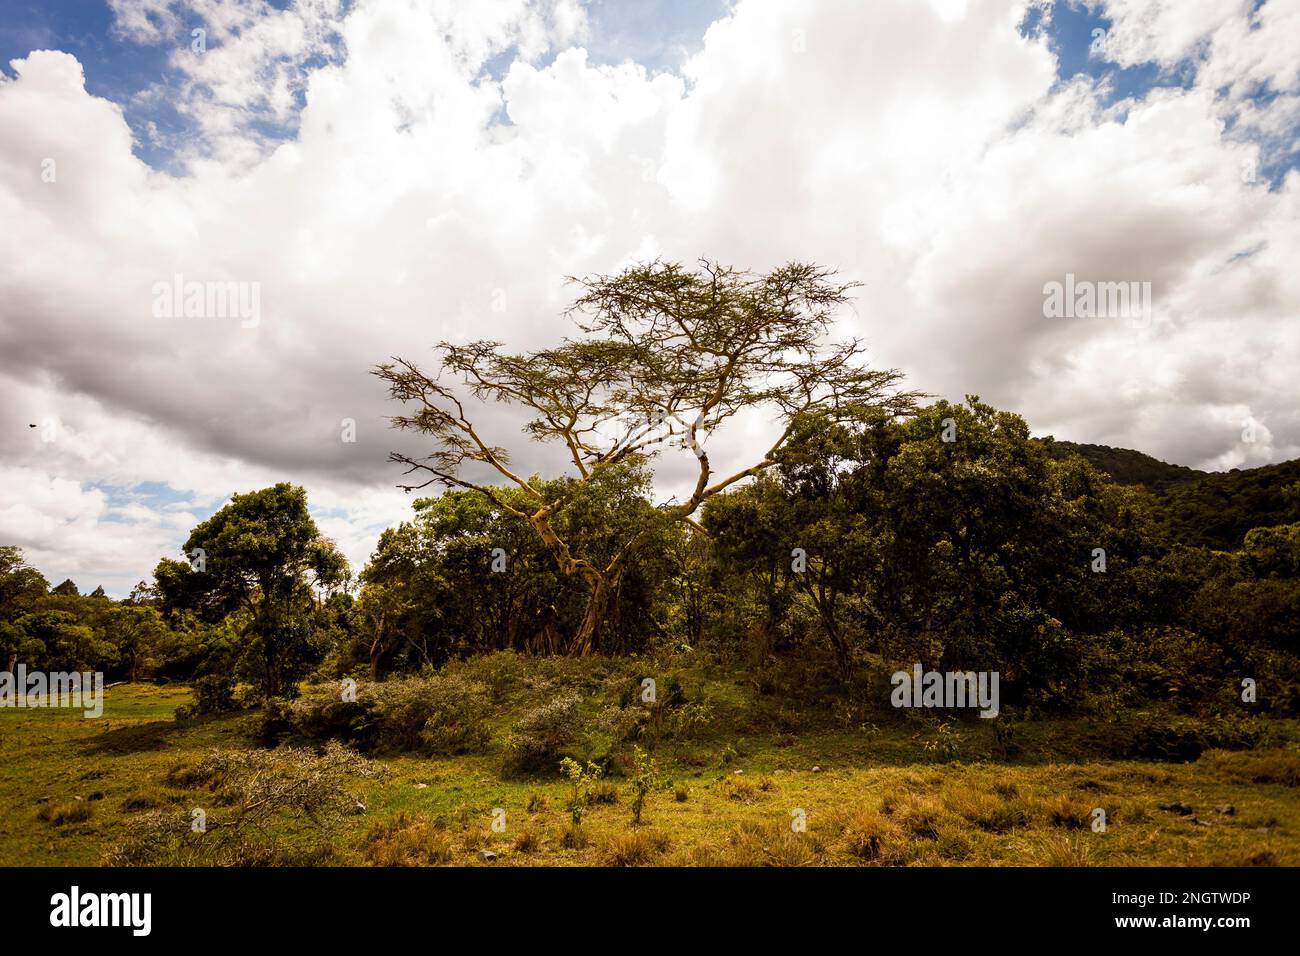 Acacia, the most common tree in Tanzania, africa, tansania Stock Photo